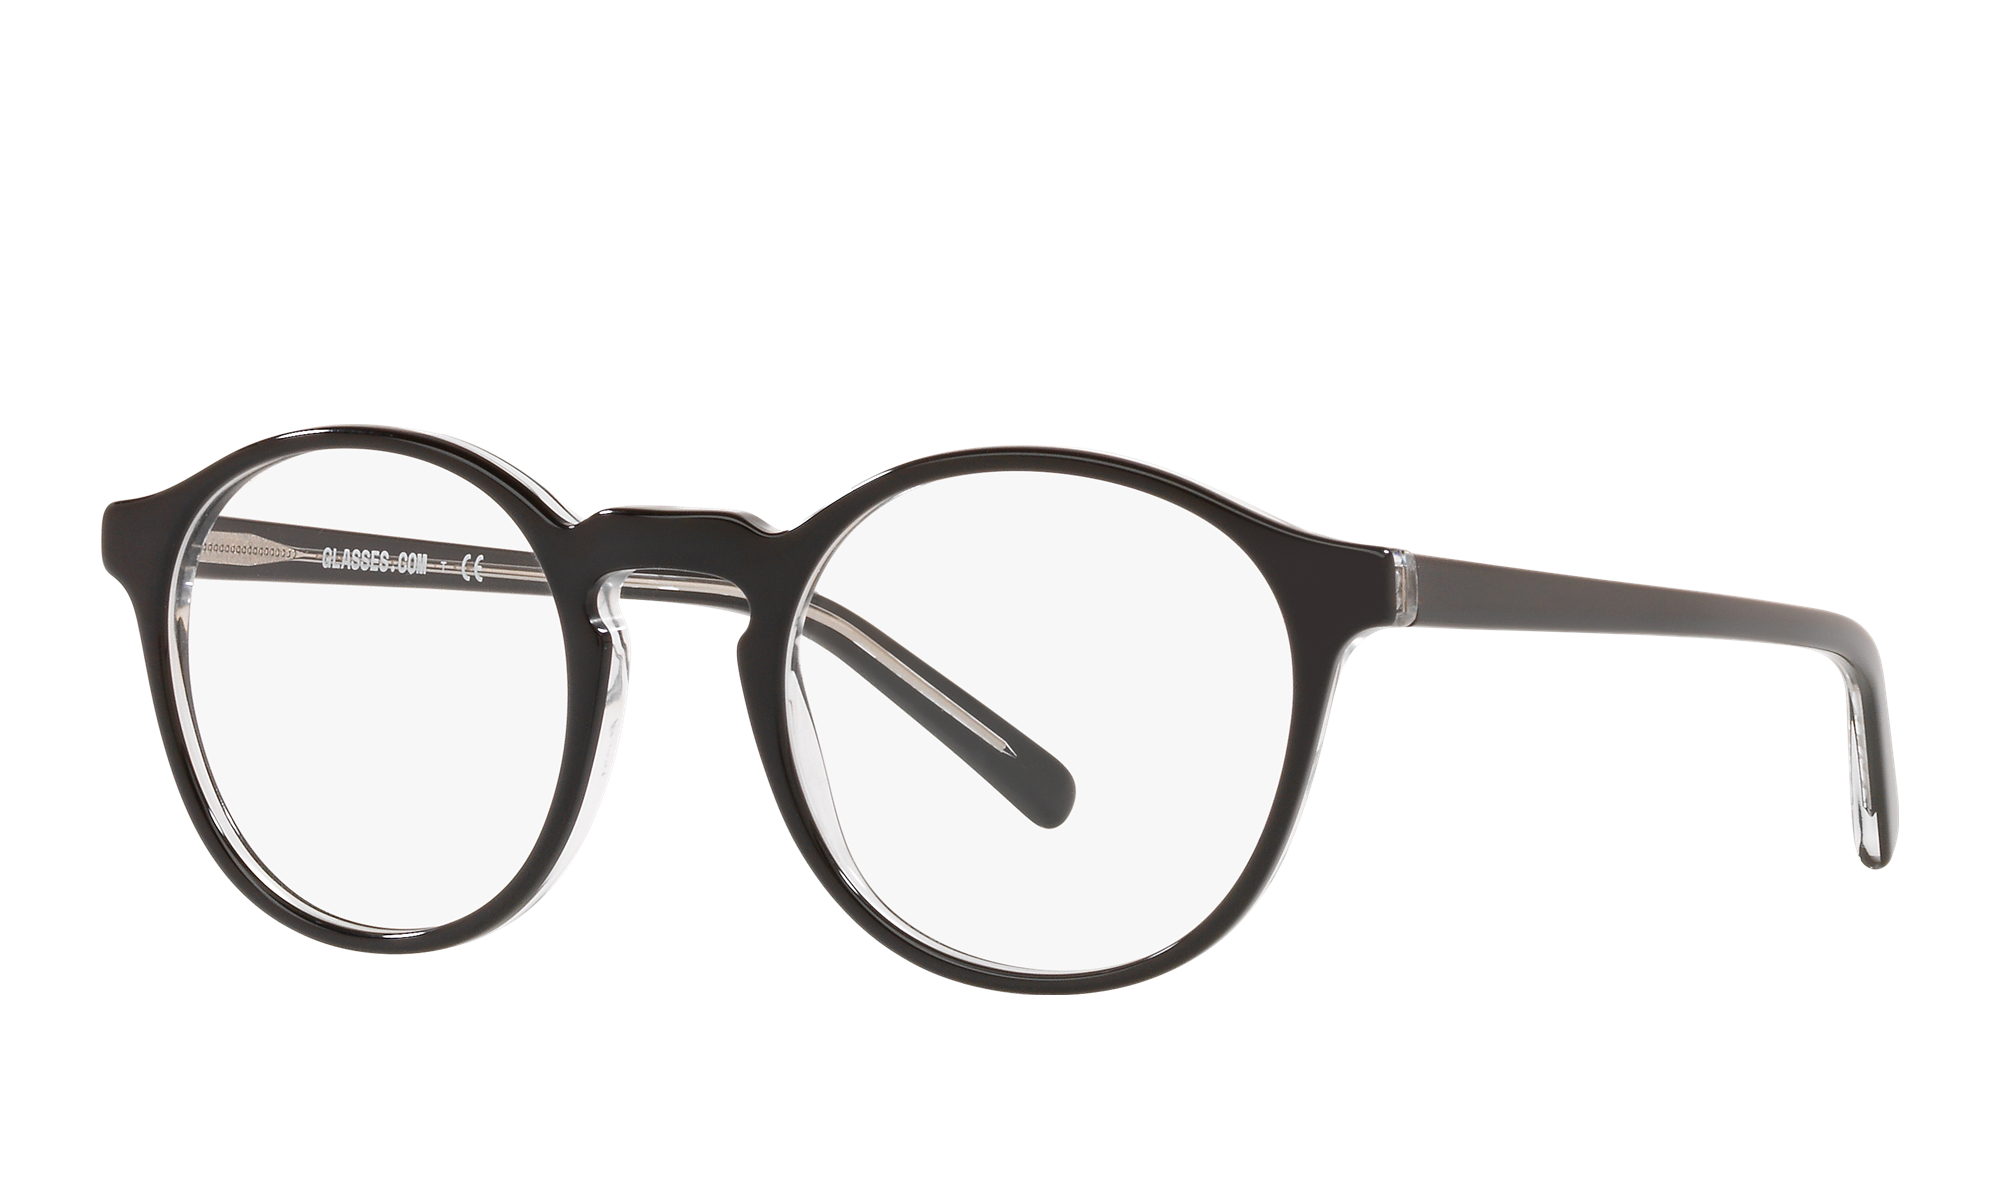 Glasses.com Unisex Gk2005 Shiny Top Black On Transparent Size: Small